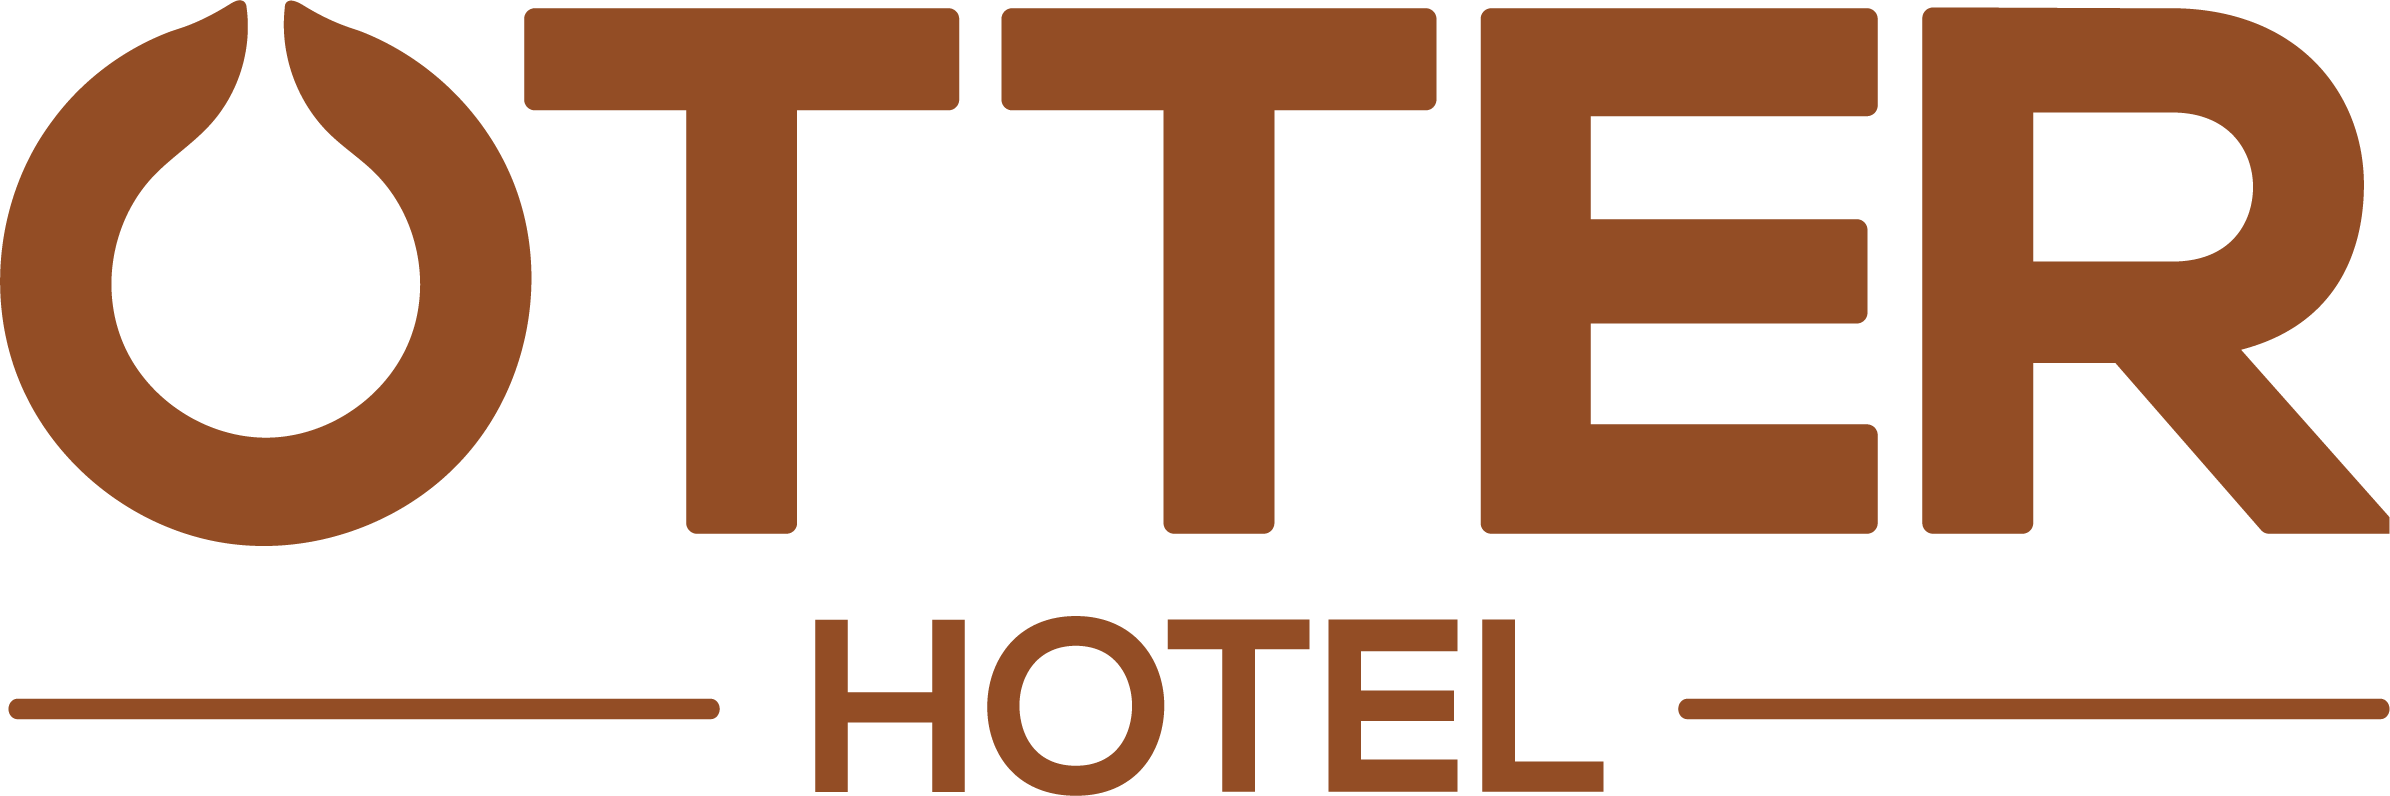 Otter Hotel Logo